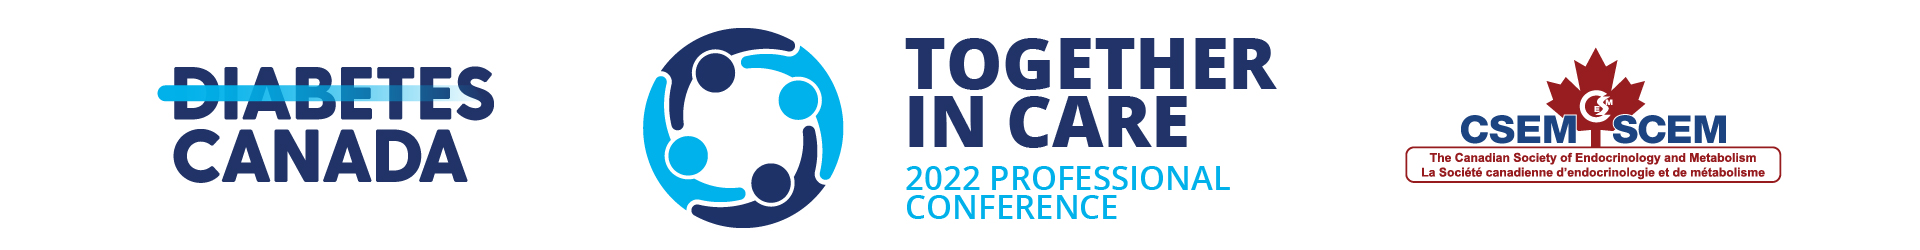 2022 Diabetes Canada/CSEM Professional Conference Event Banner